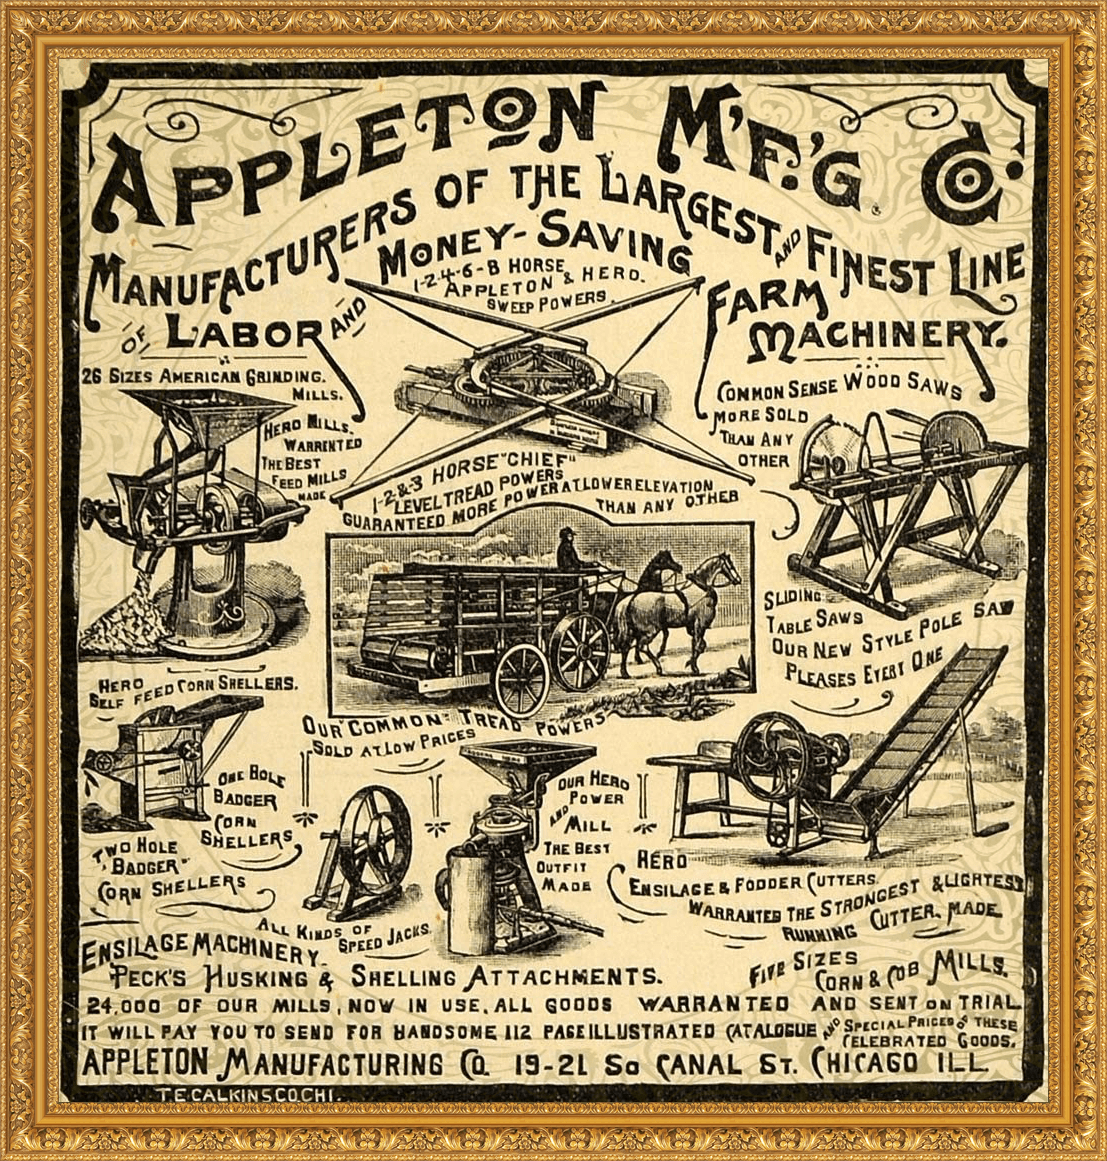 Appleton Manufacturing Company